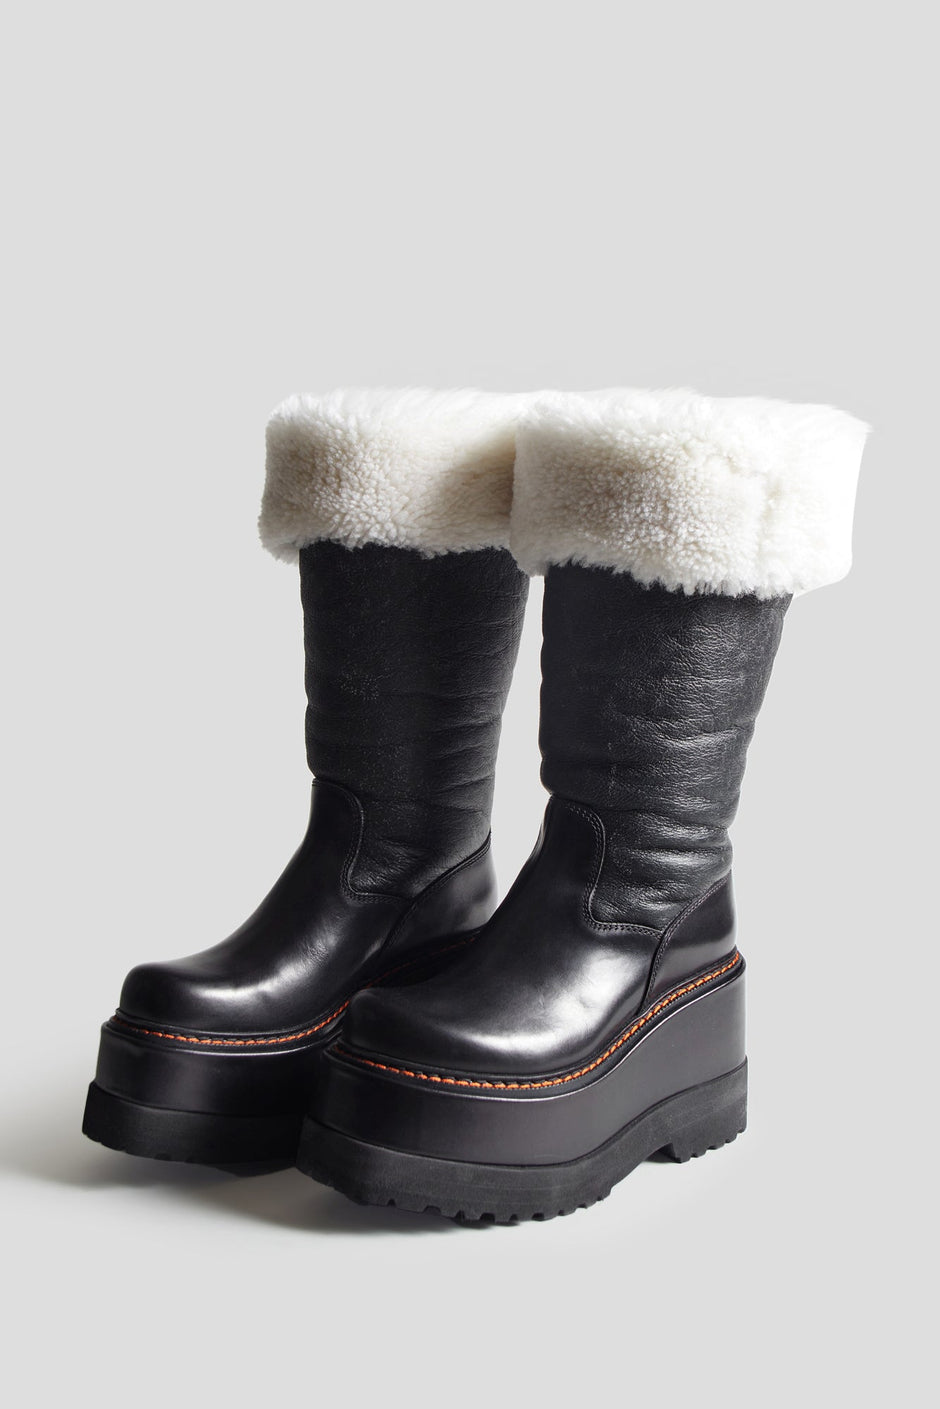 Women's Boots | R13 Denim Official Site – Page 2